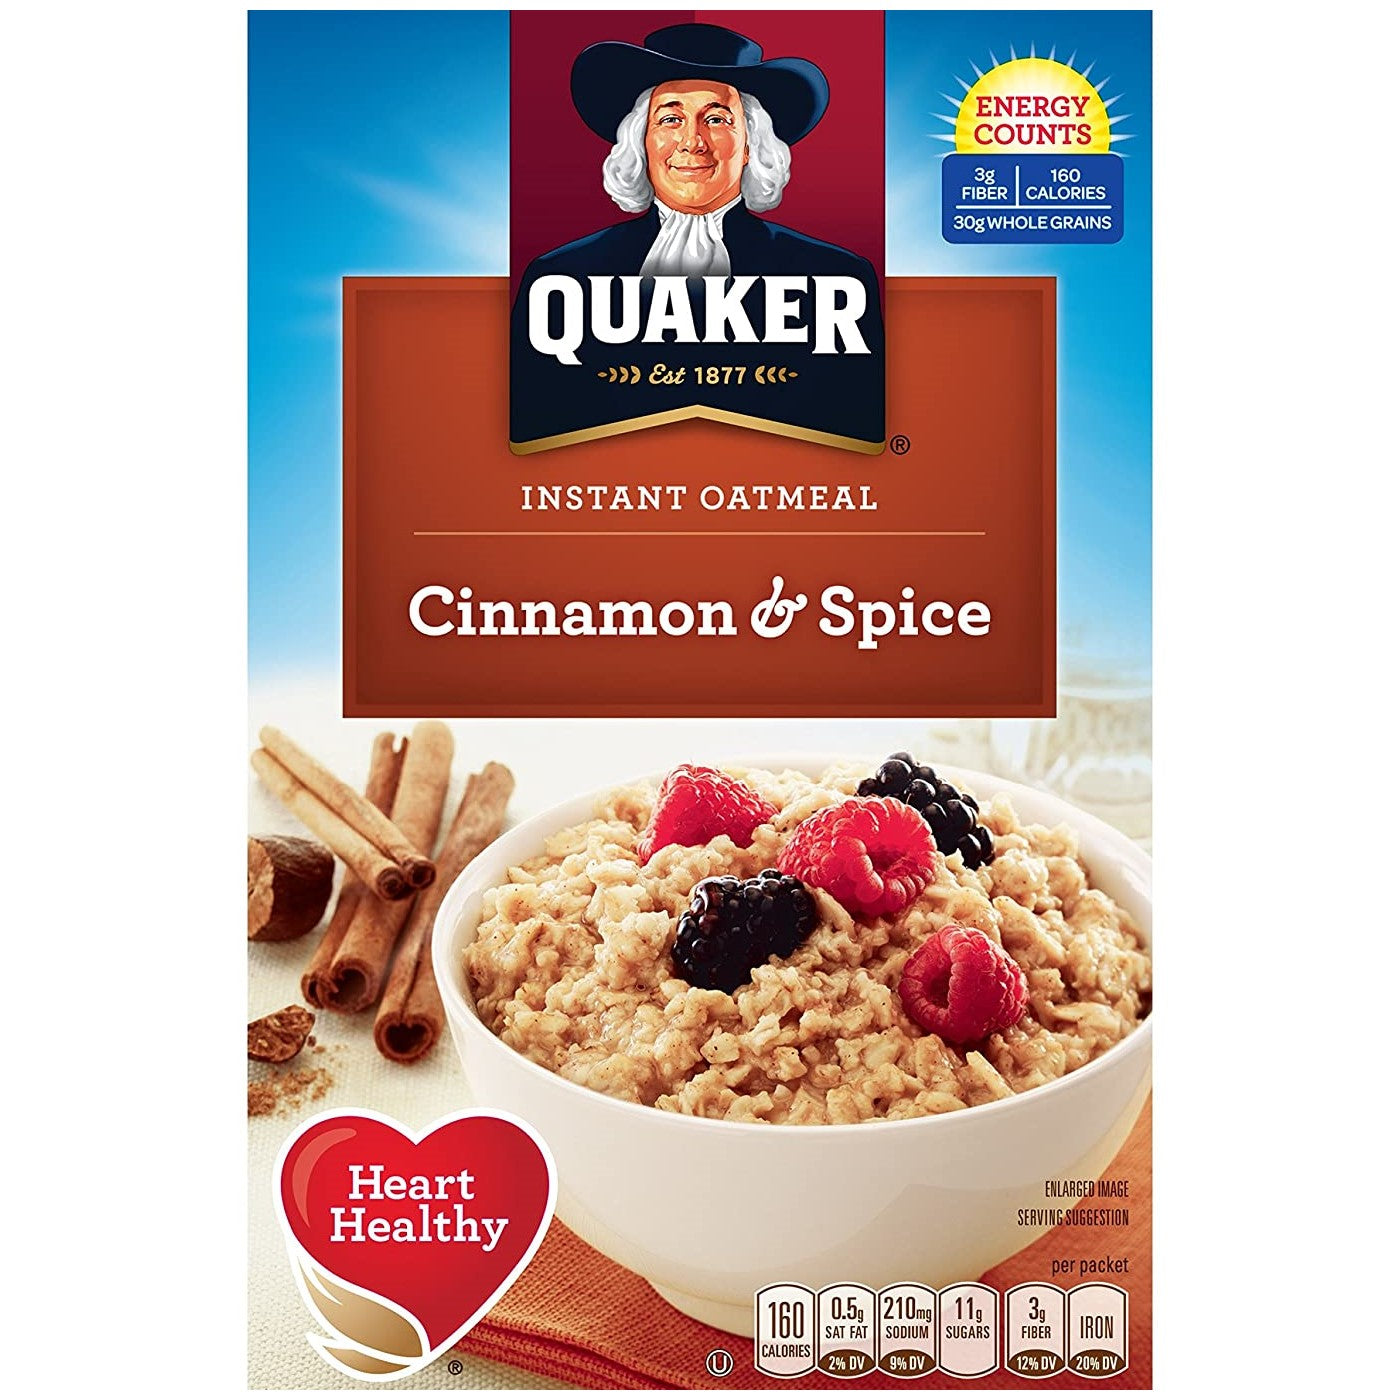 Quaker Oatmeal Singles - Cinnamon & Spice 5 Sachets